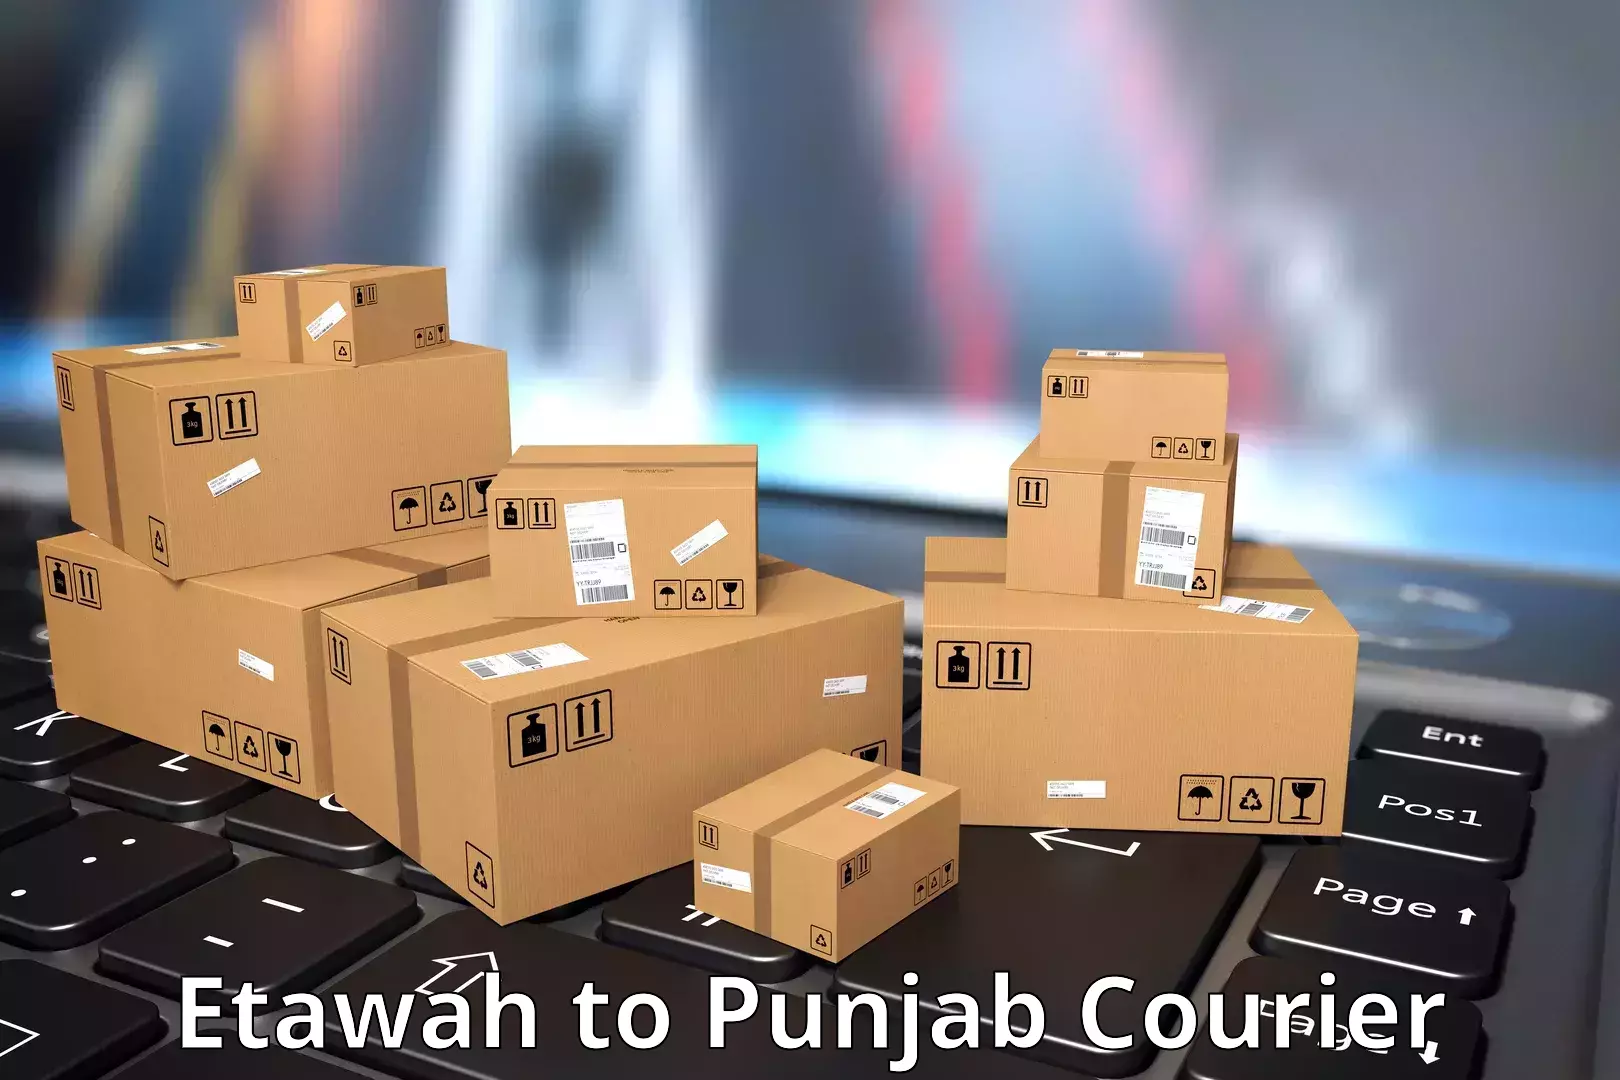 Courier service comparison in Etawah to Mandi Gobindgarh